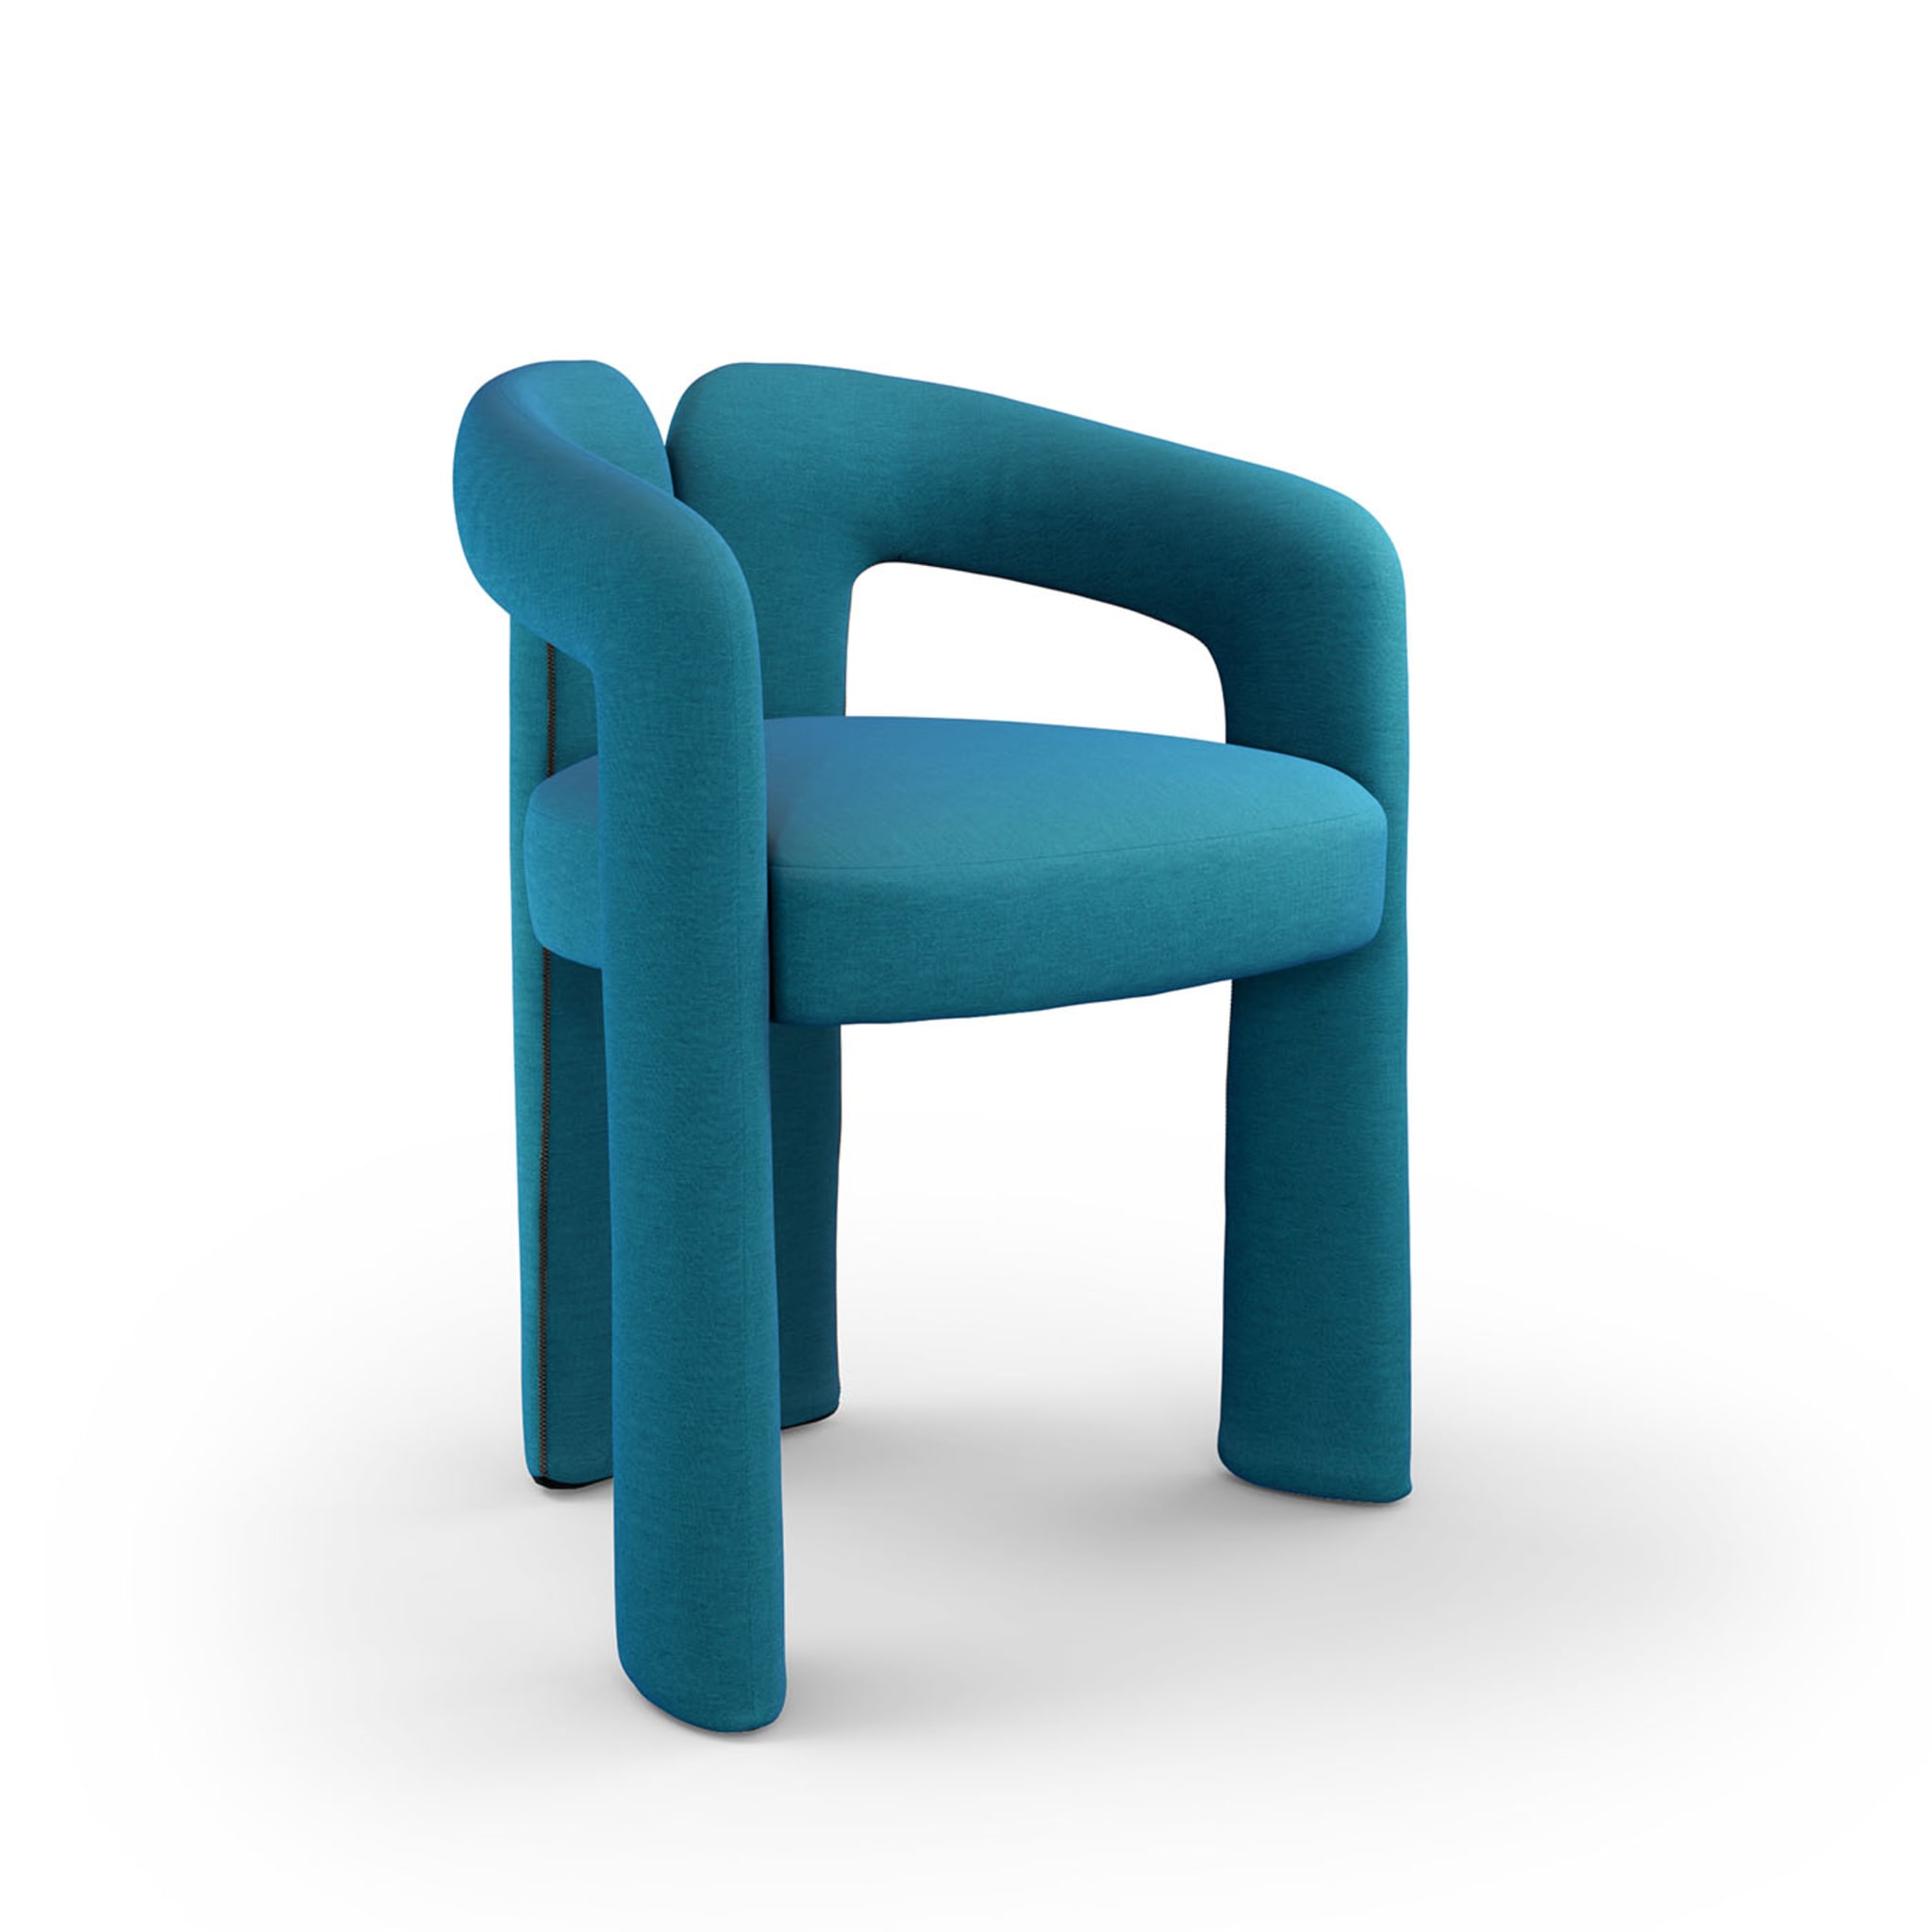 Dudet Cyan Chair by Patricia Urquiola  - Alternative view 3